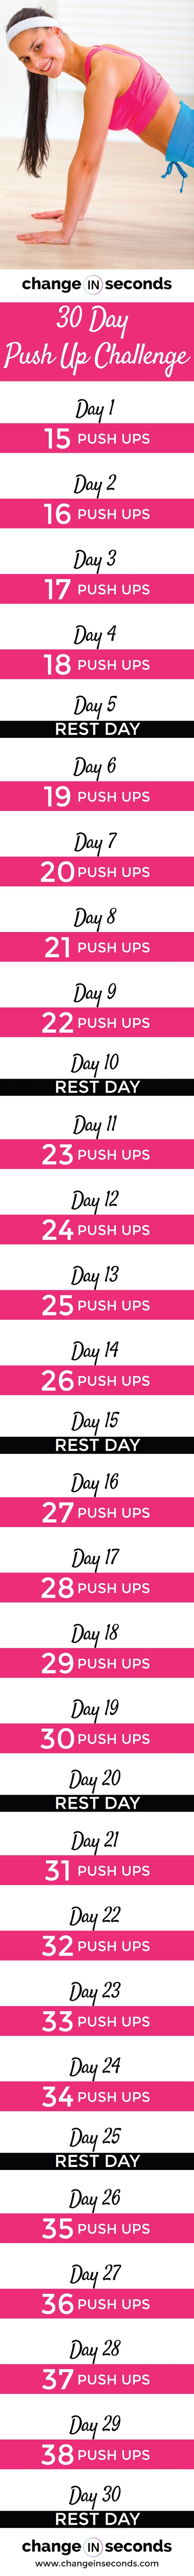 30 Day PushUp Challenge